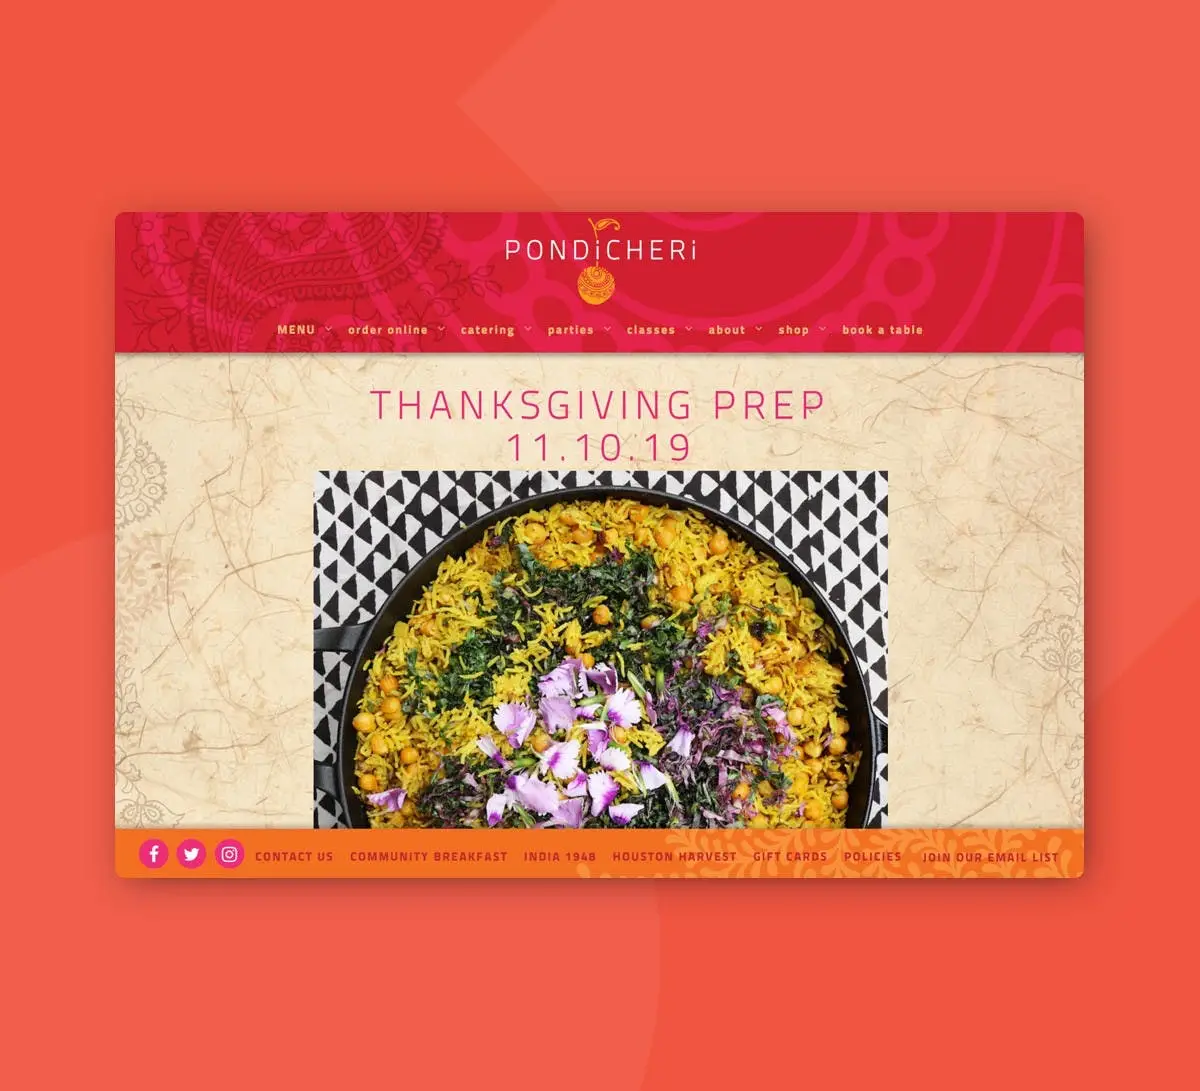 Pondicheri's Thanksgiving Prep event page